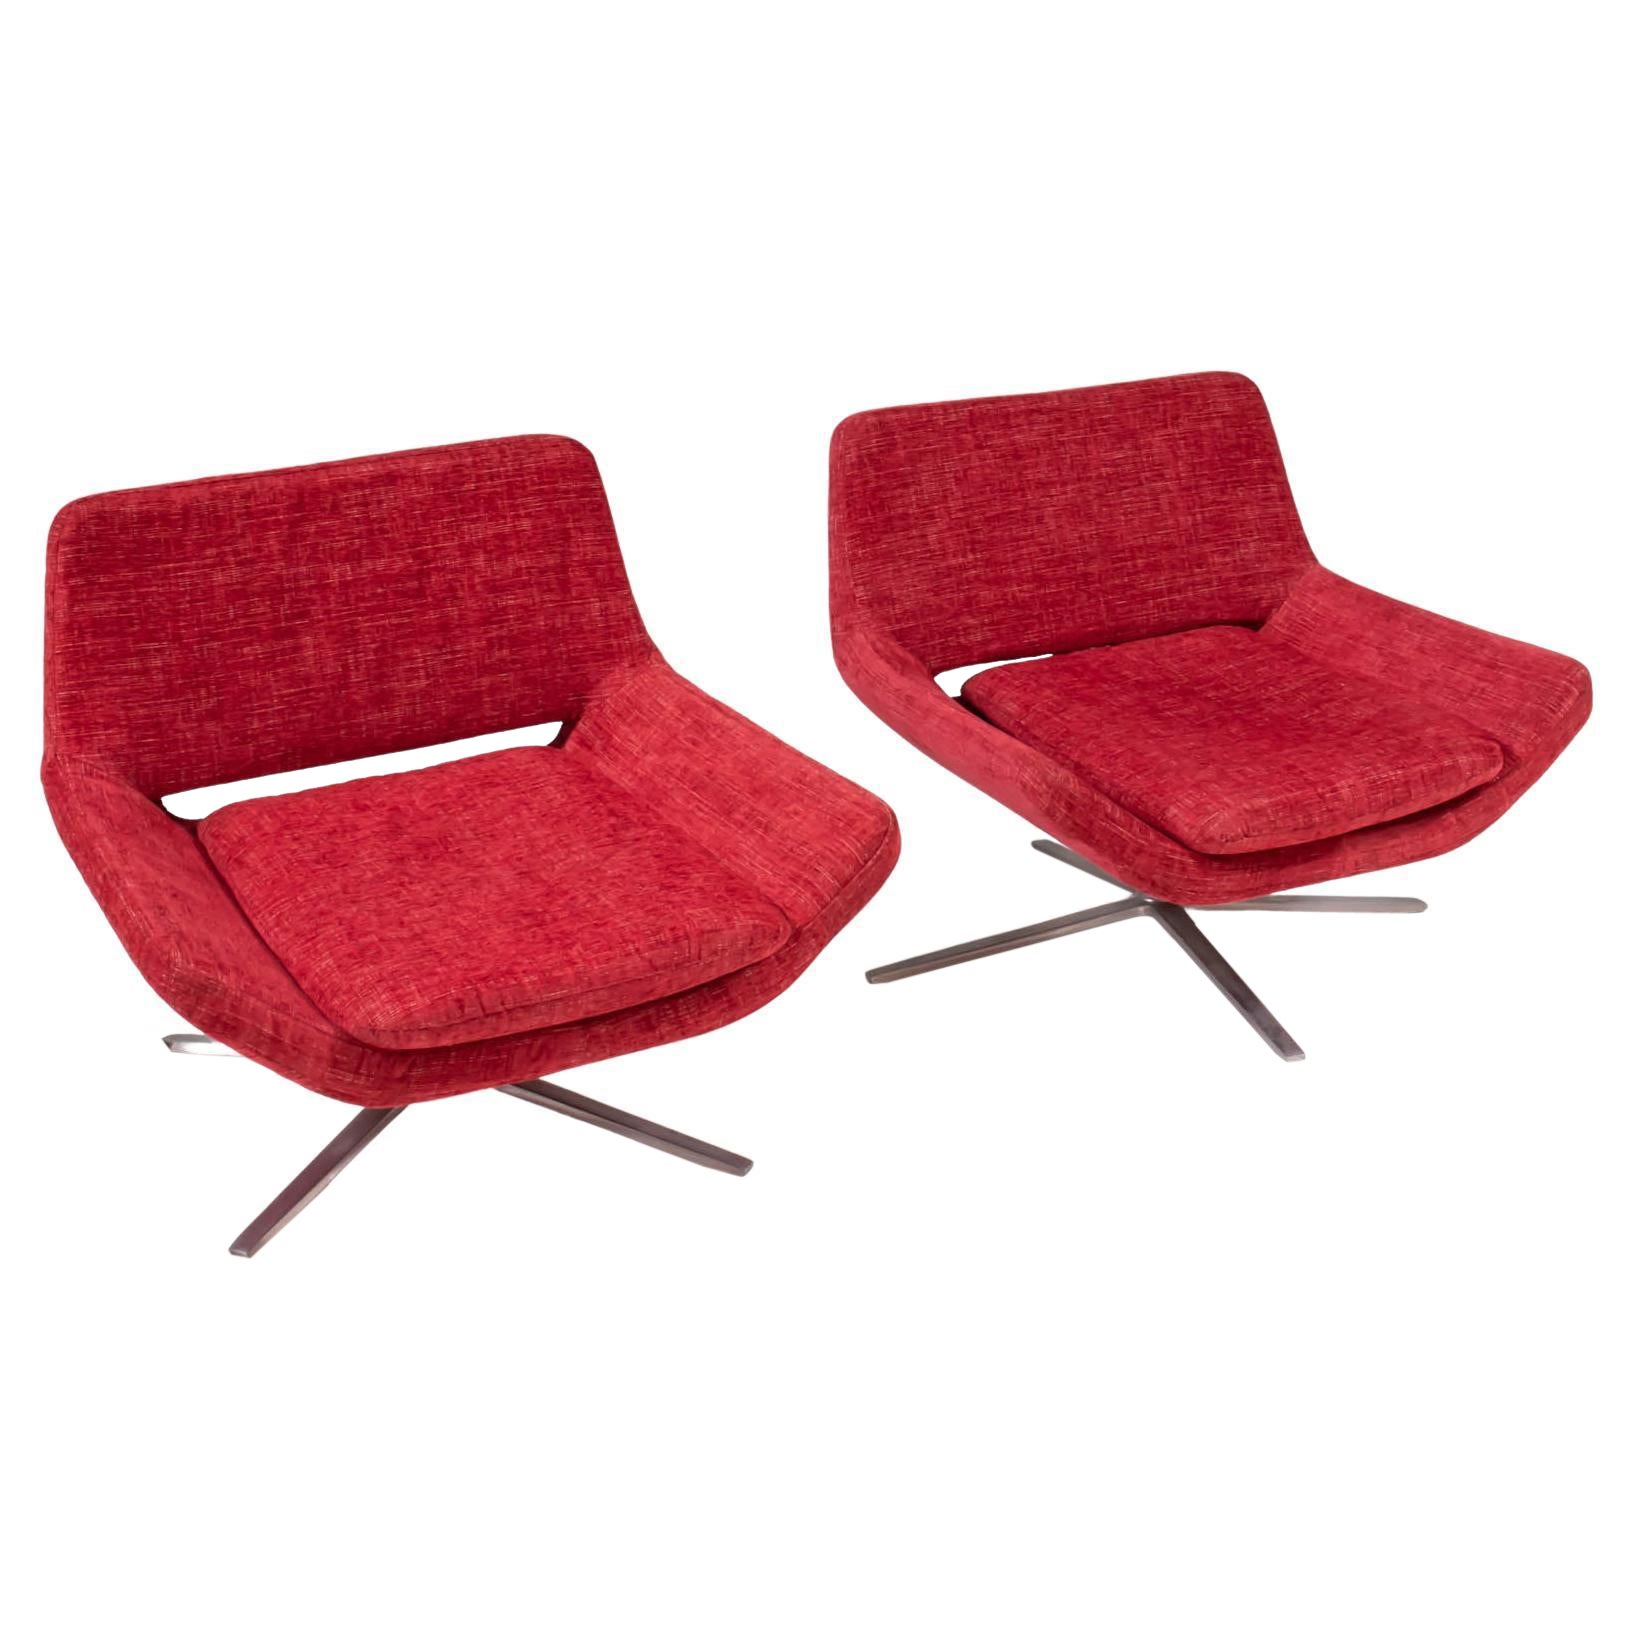 Pair of Metropolitan Red Armchairs by Jeffrey Bernett for B&B Italia